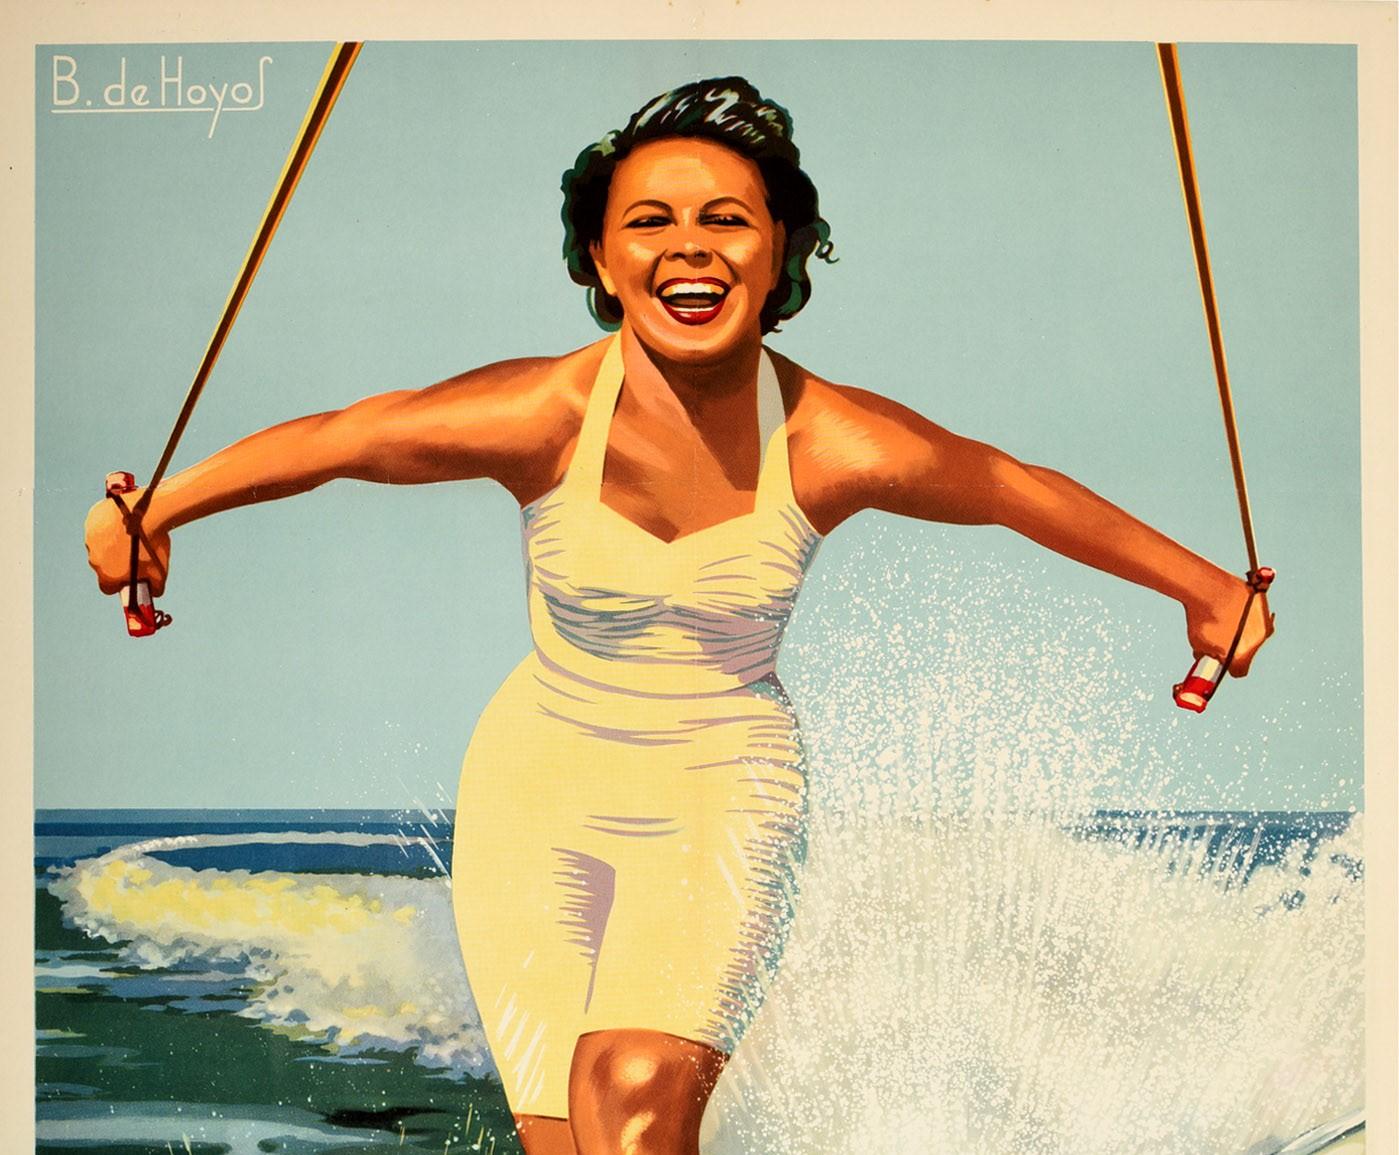 Original Vintage Poster Cadiz Best Beach Great Summer Holidays Water Ski Travel - Print by B de Hoyos